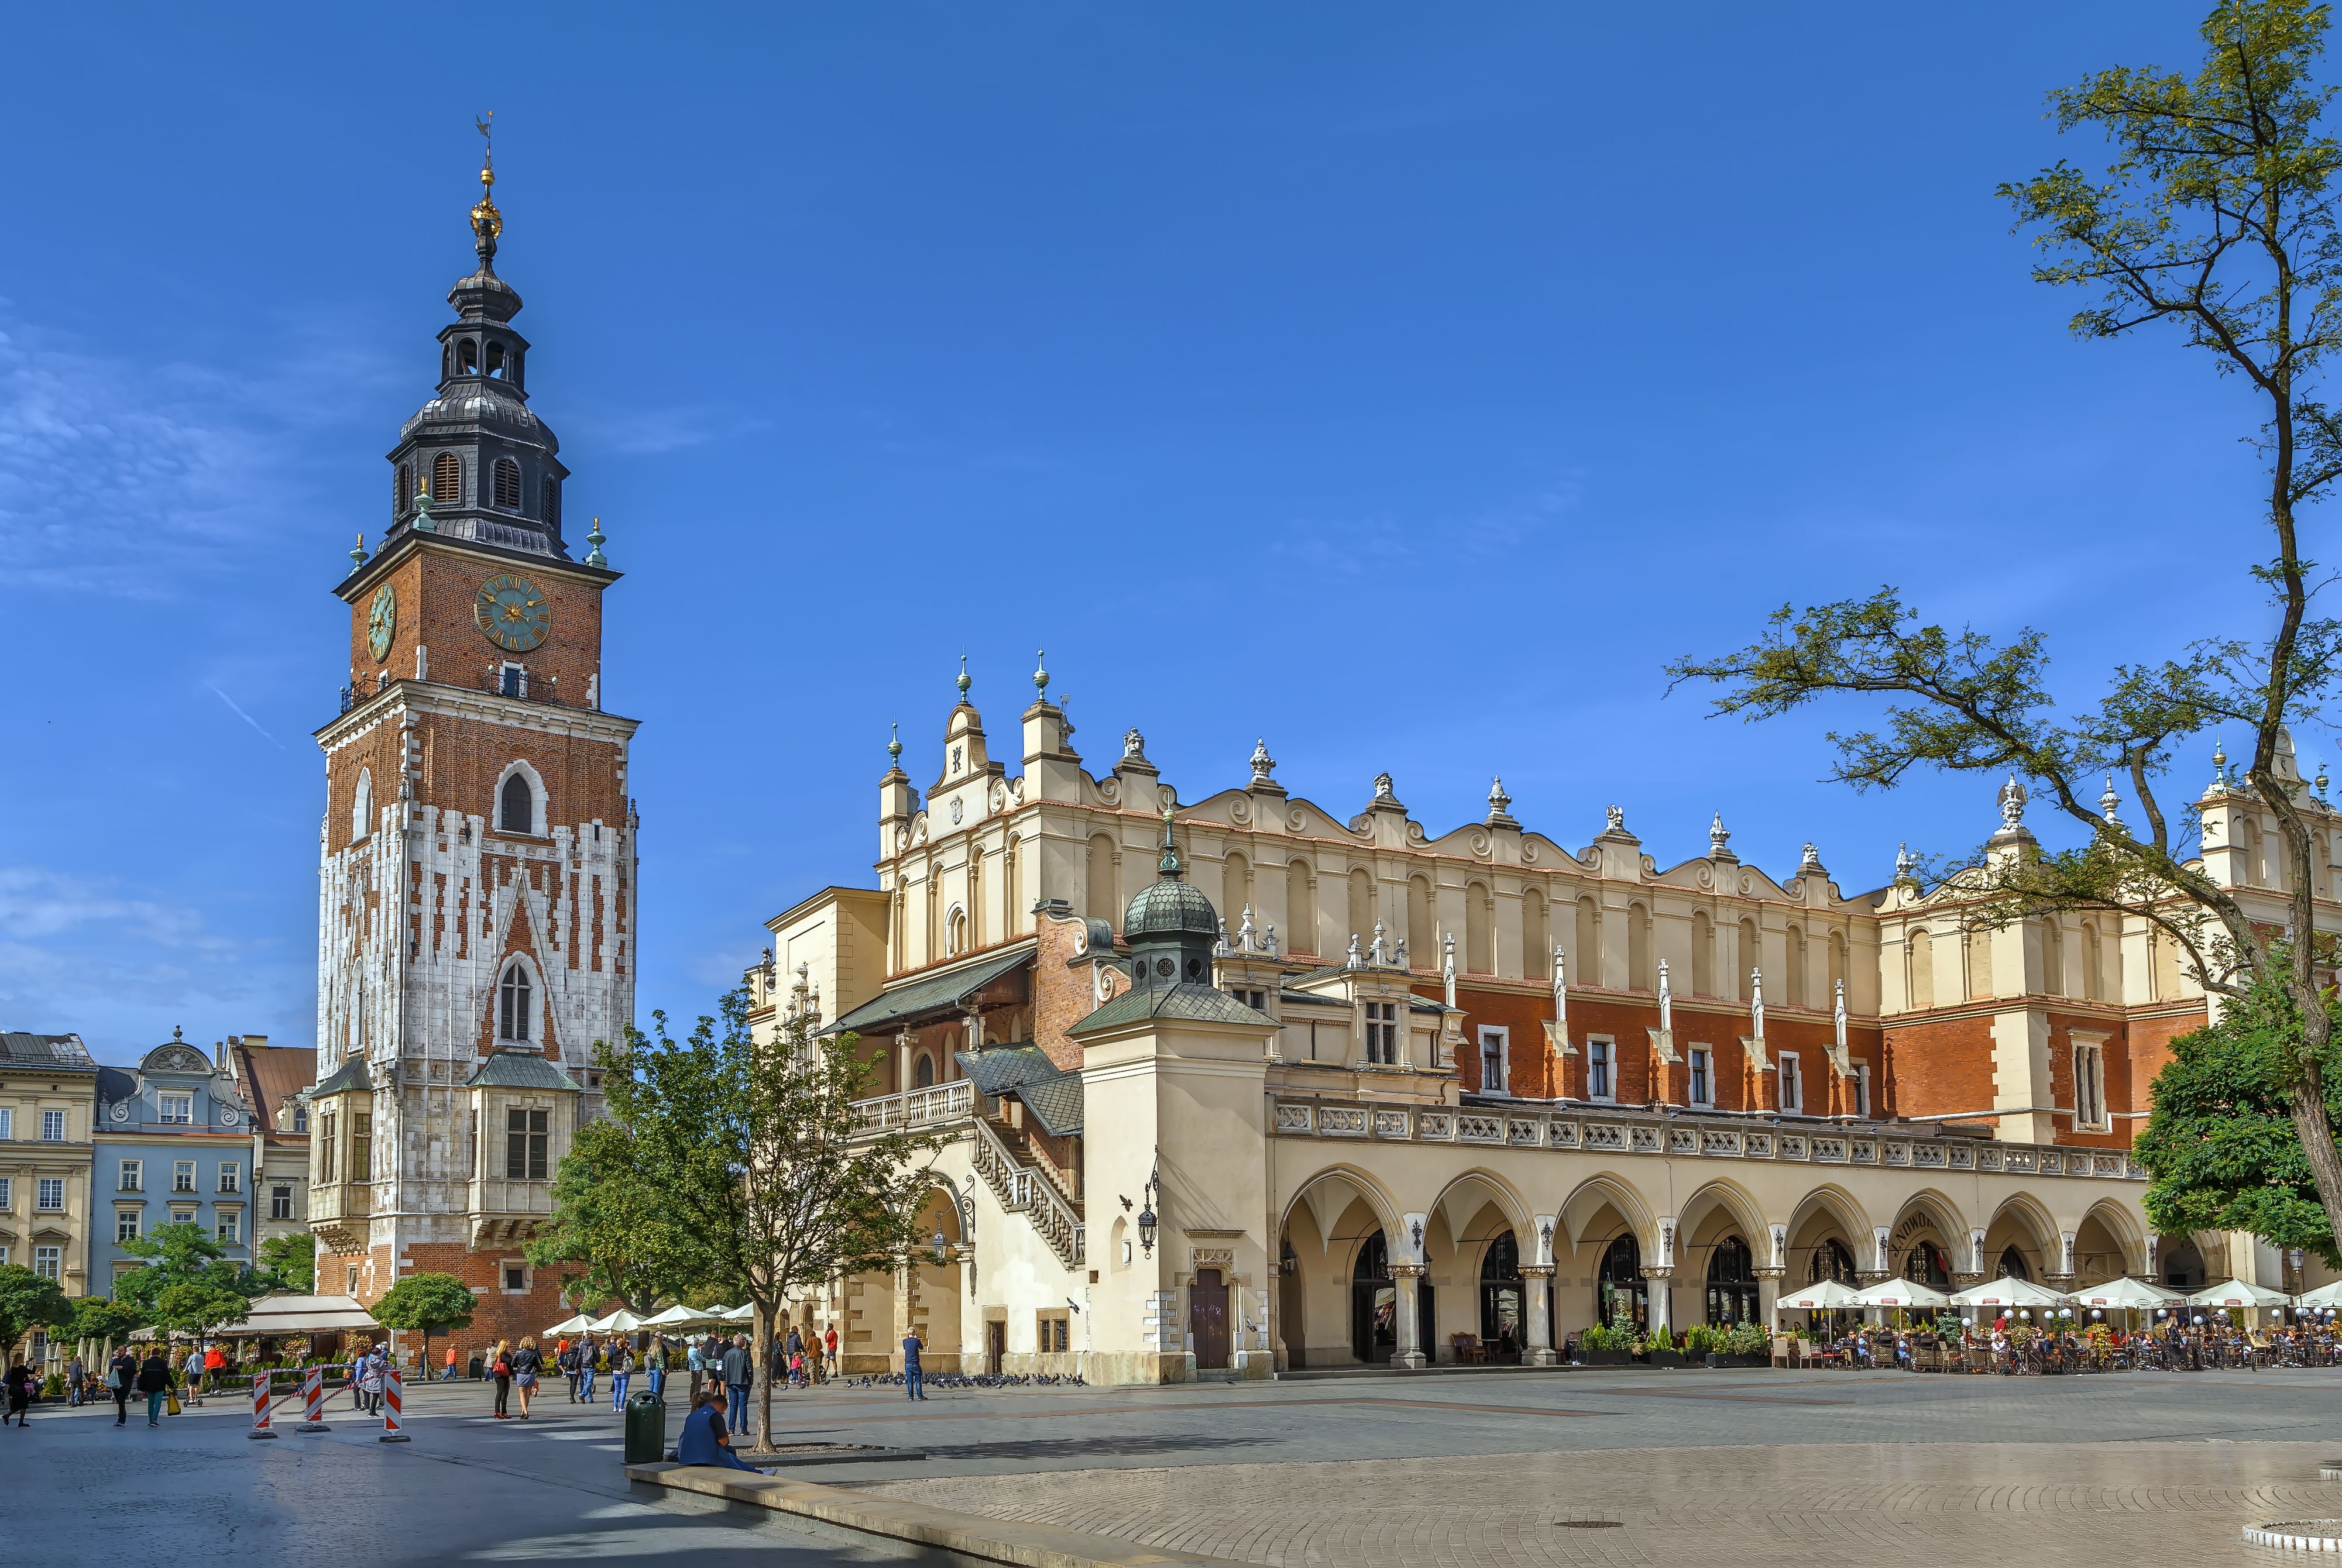 Krakow Cloth Hall and Town Hall Tower 